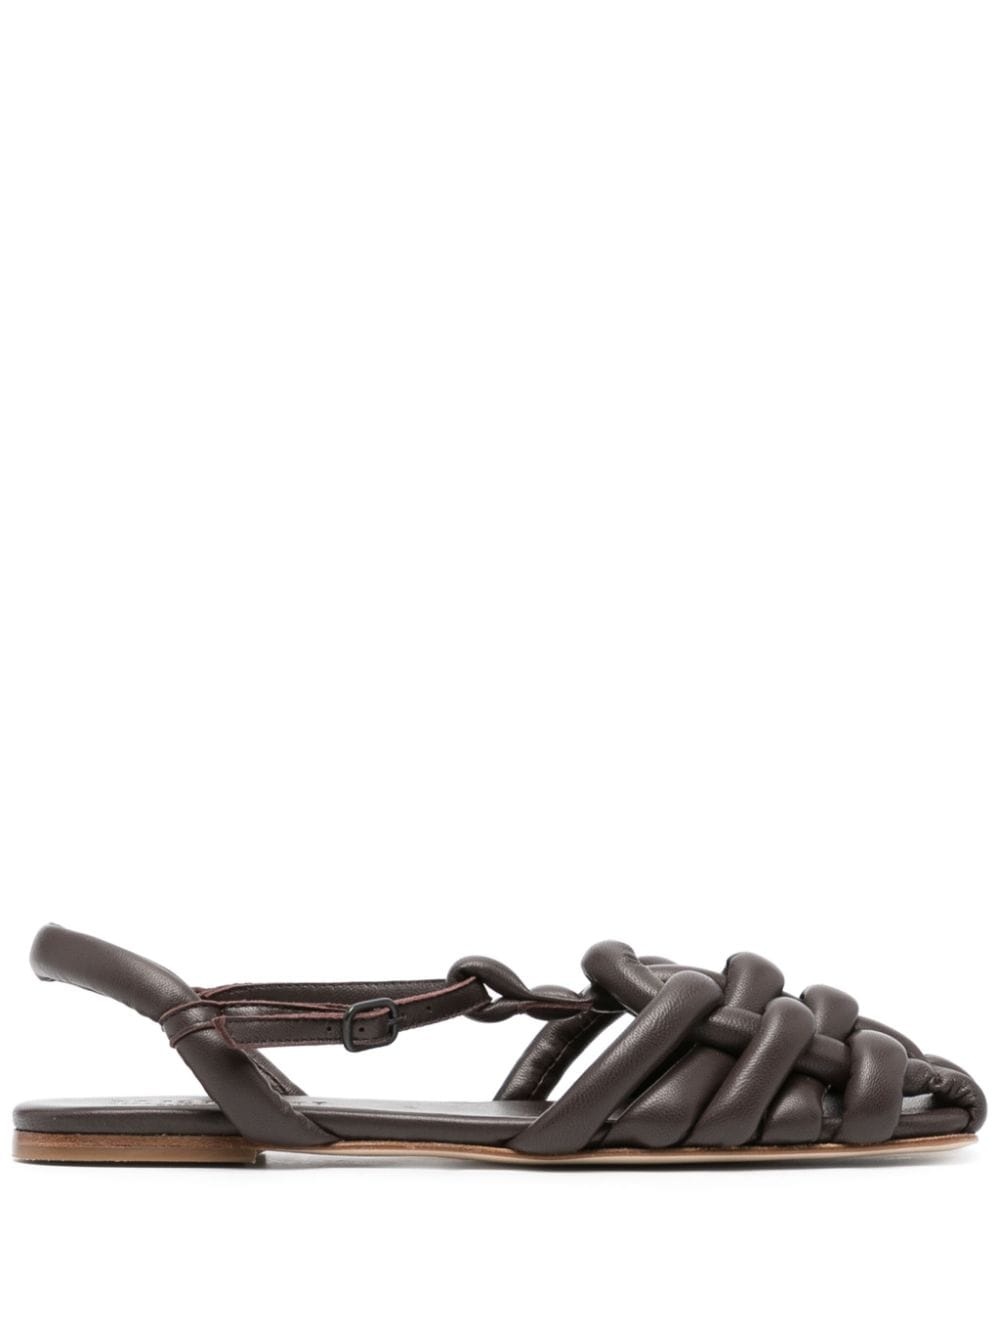 Cabersa pebbled leather sandals - 1